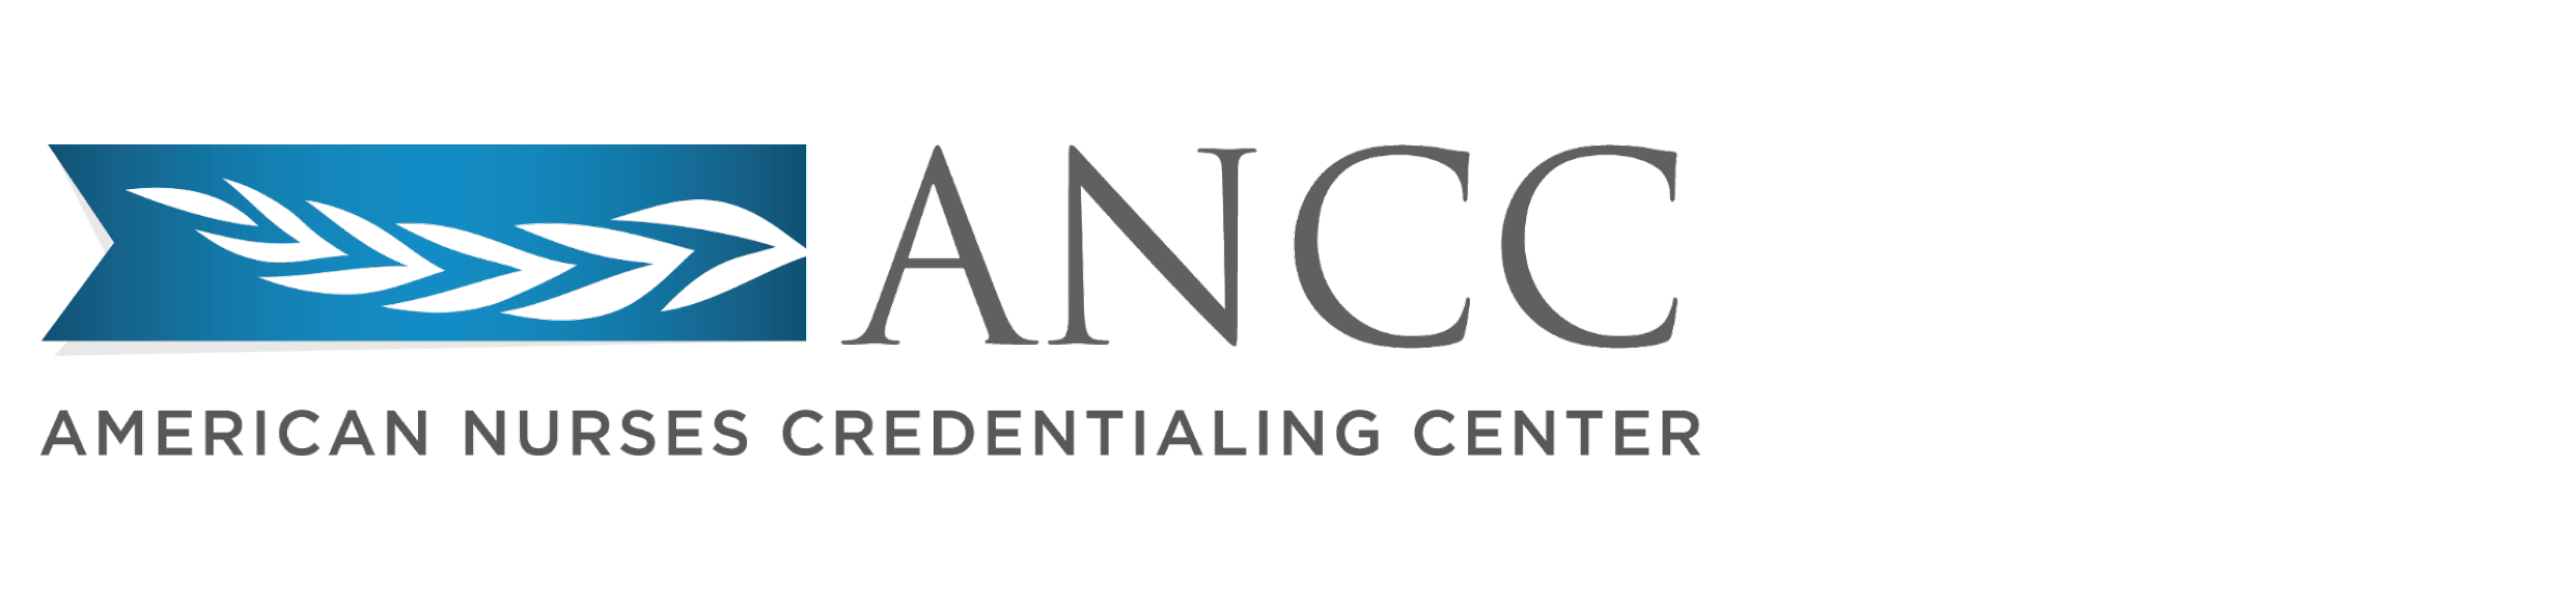 American Nurses Credentialing Center (ANCC) logo